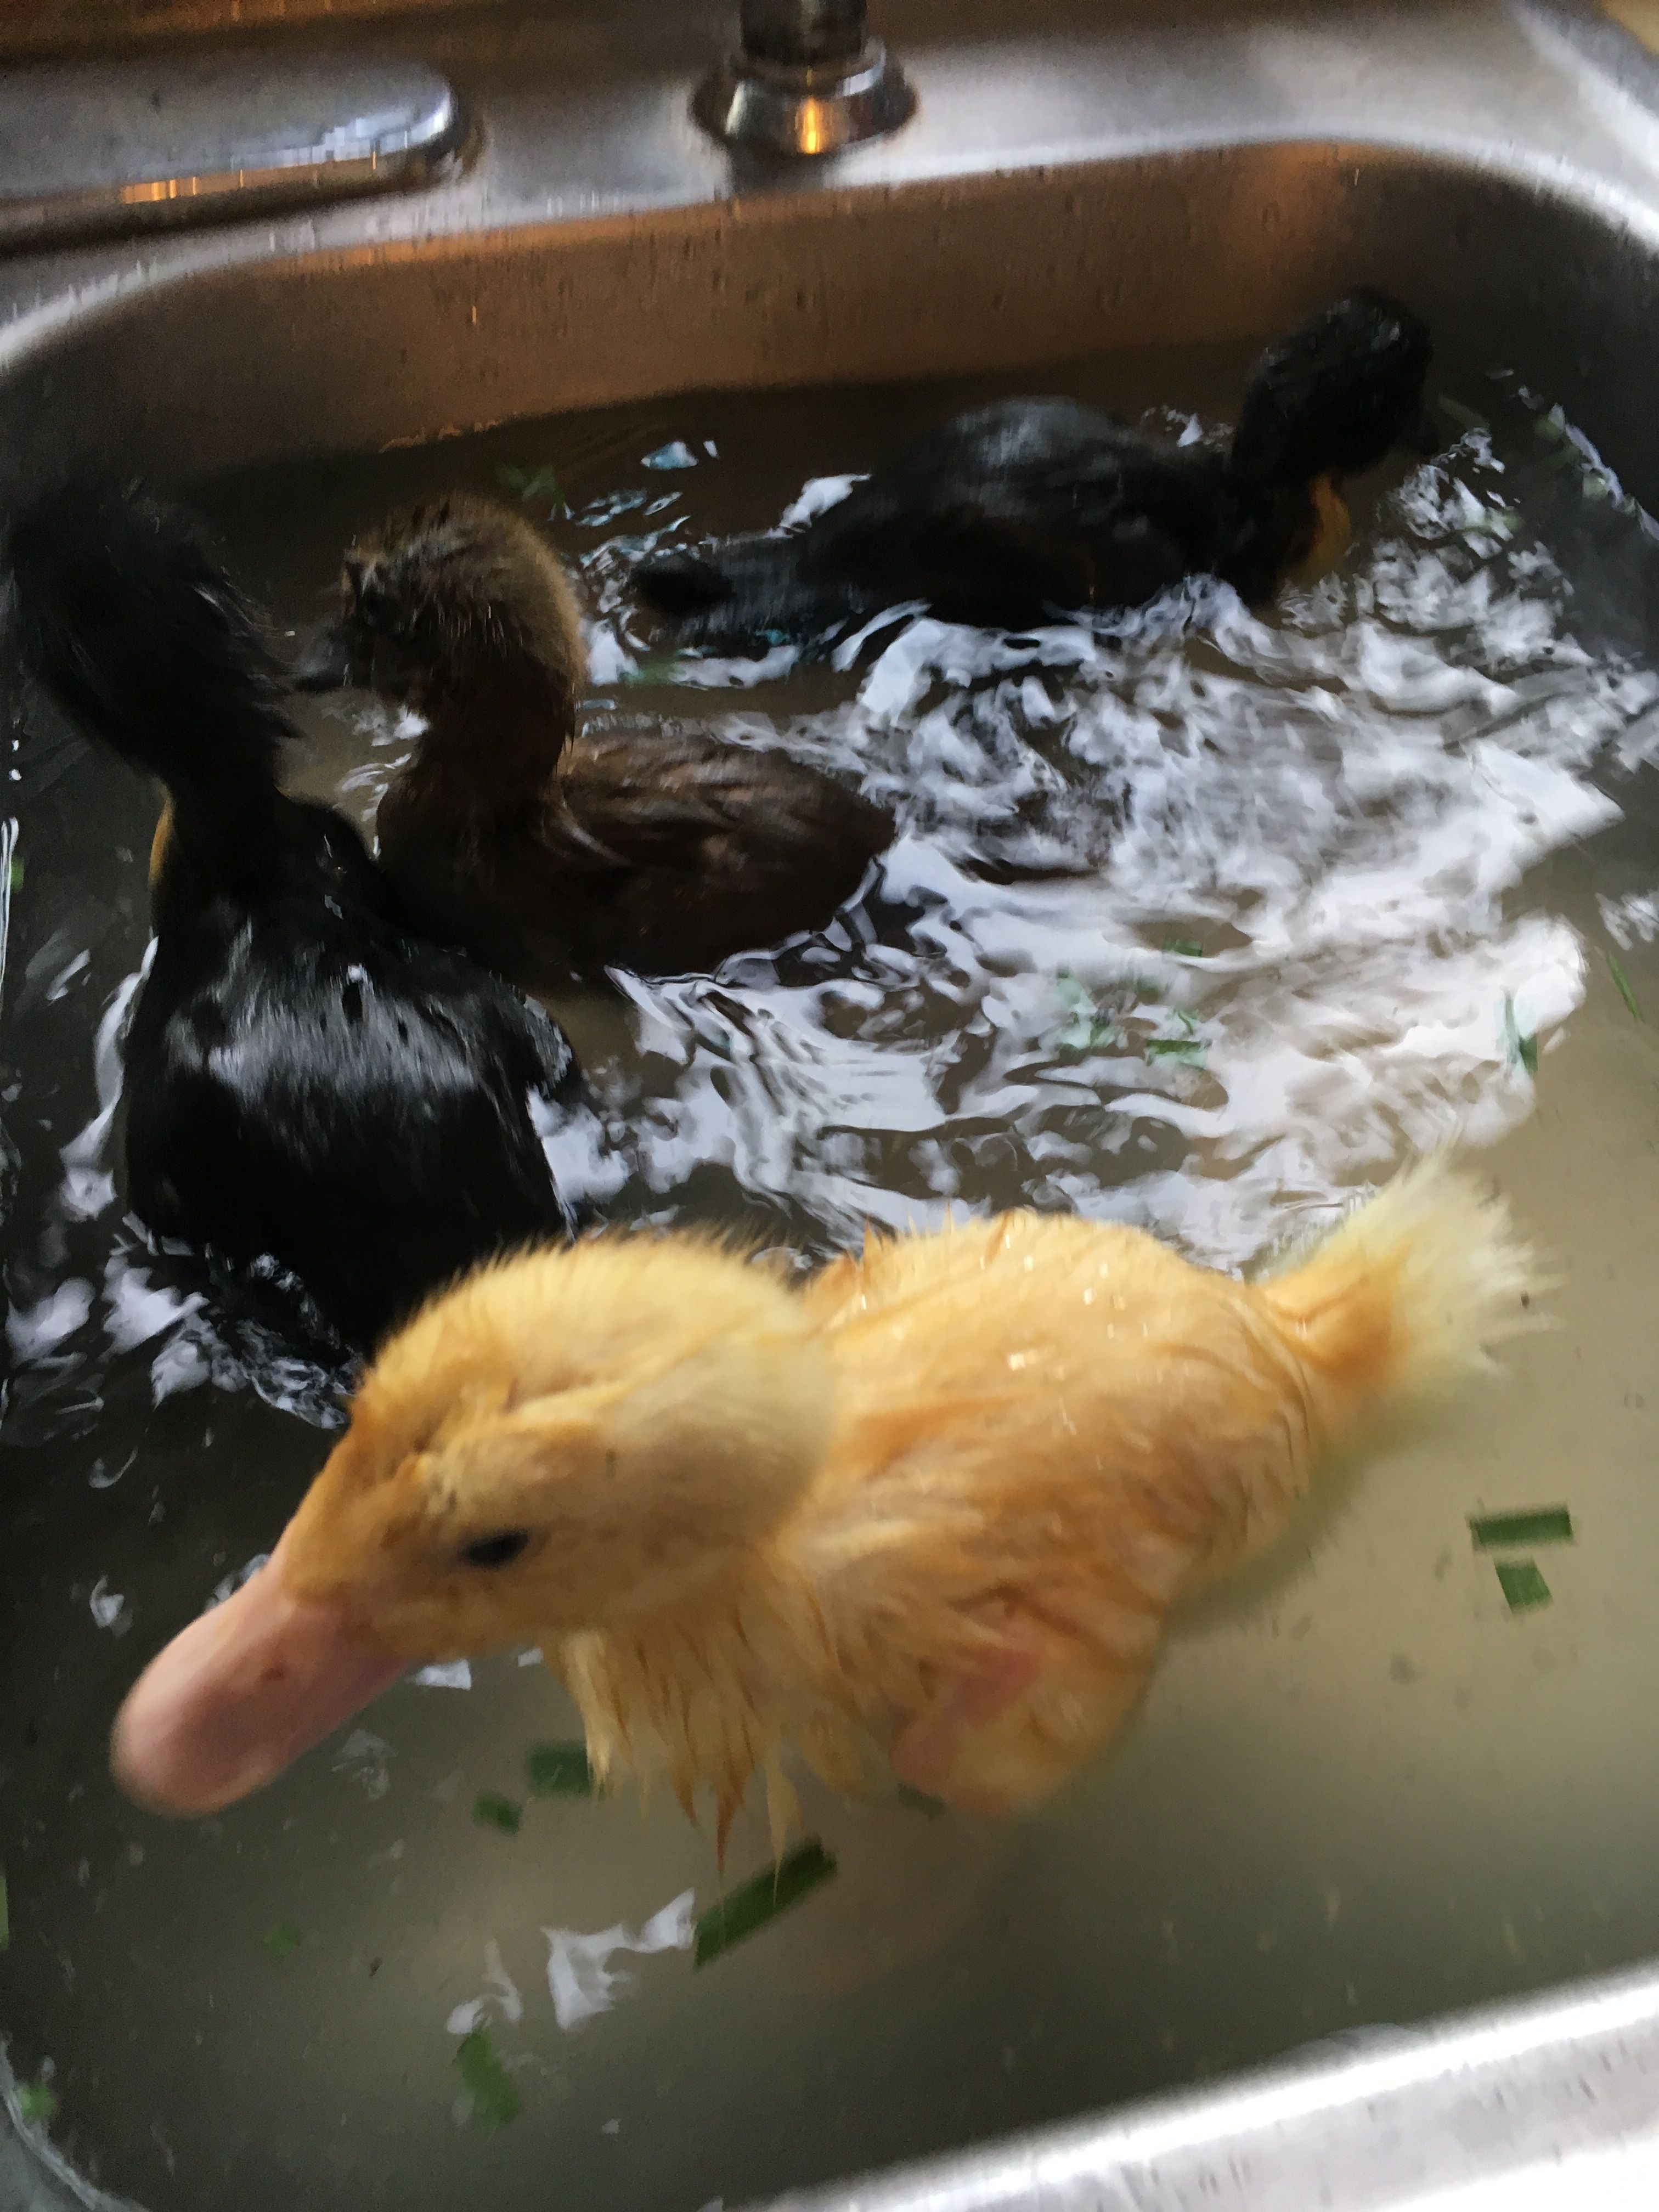 baby ducklings swimming